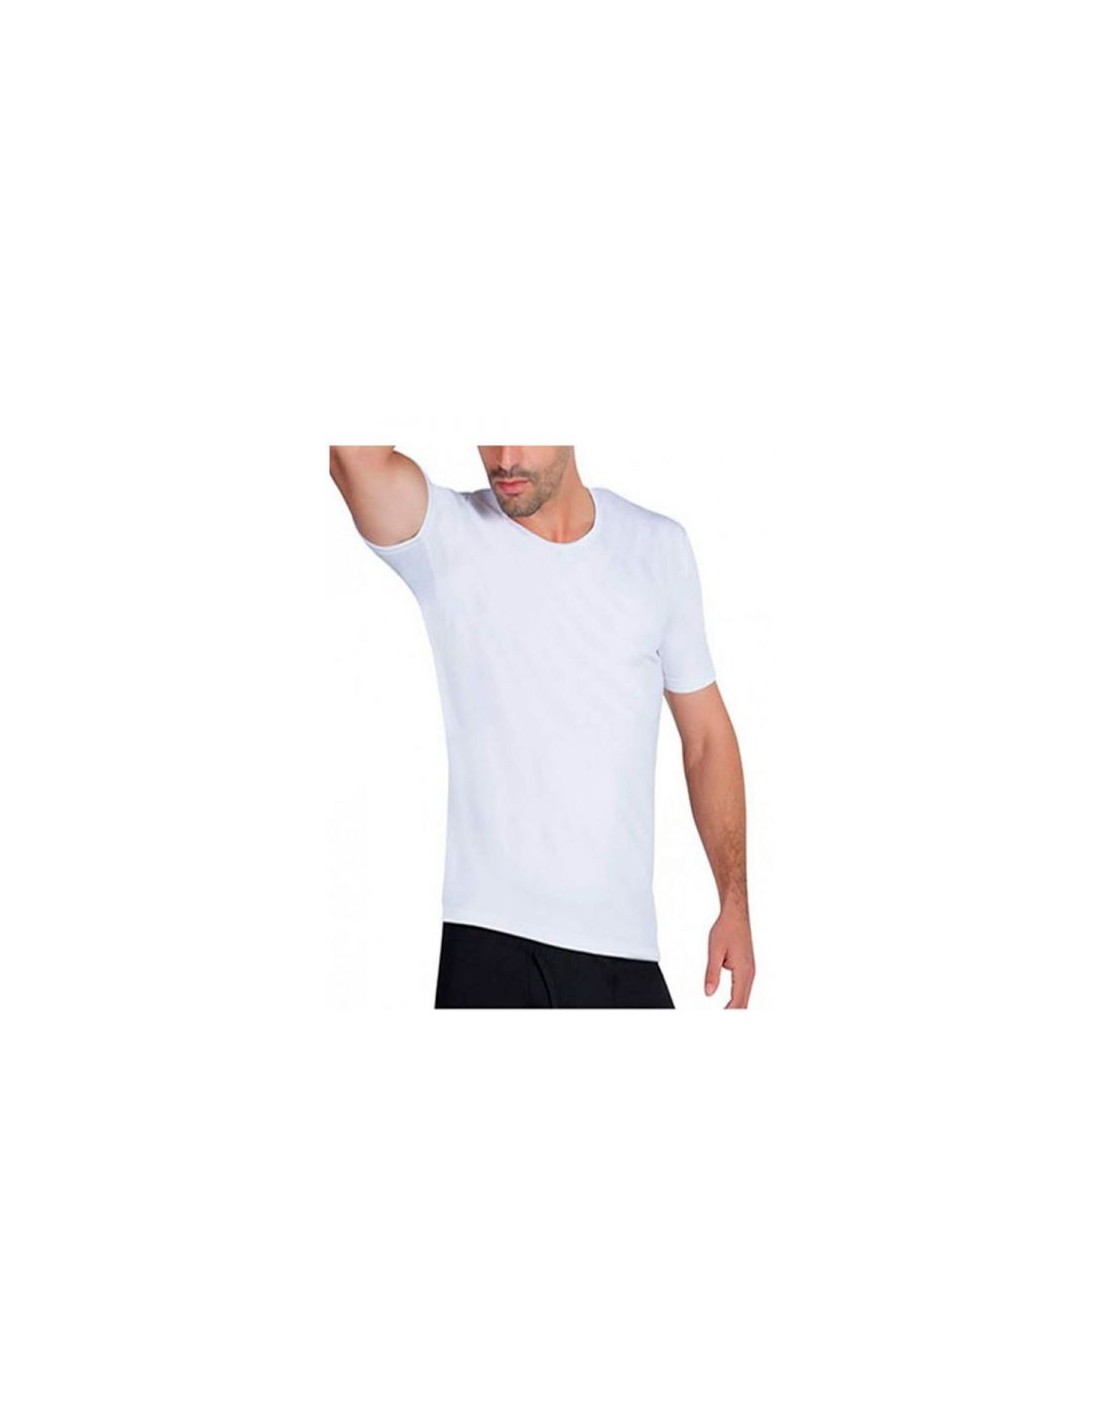  Camiseta térmica térmica unisex para adultos, con